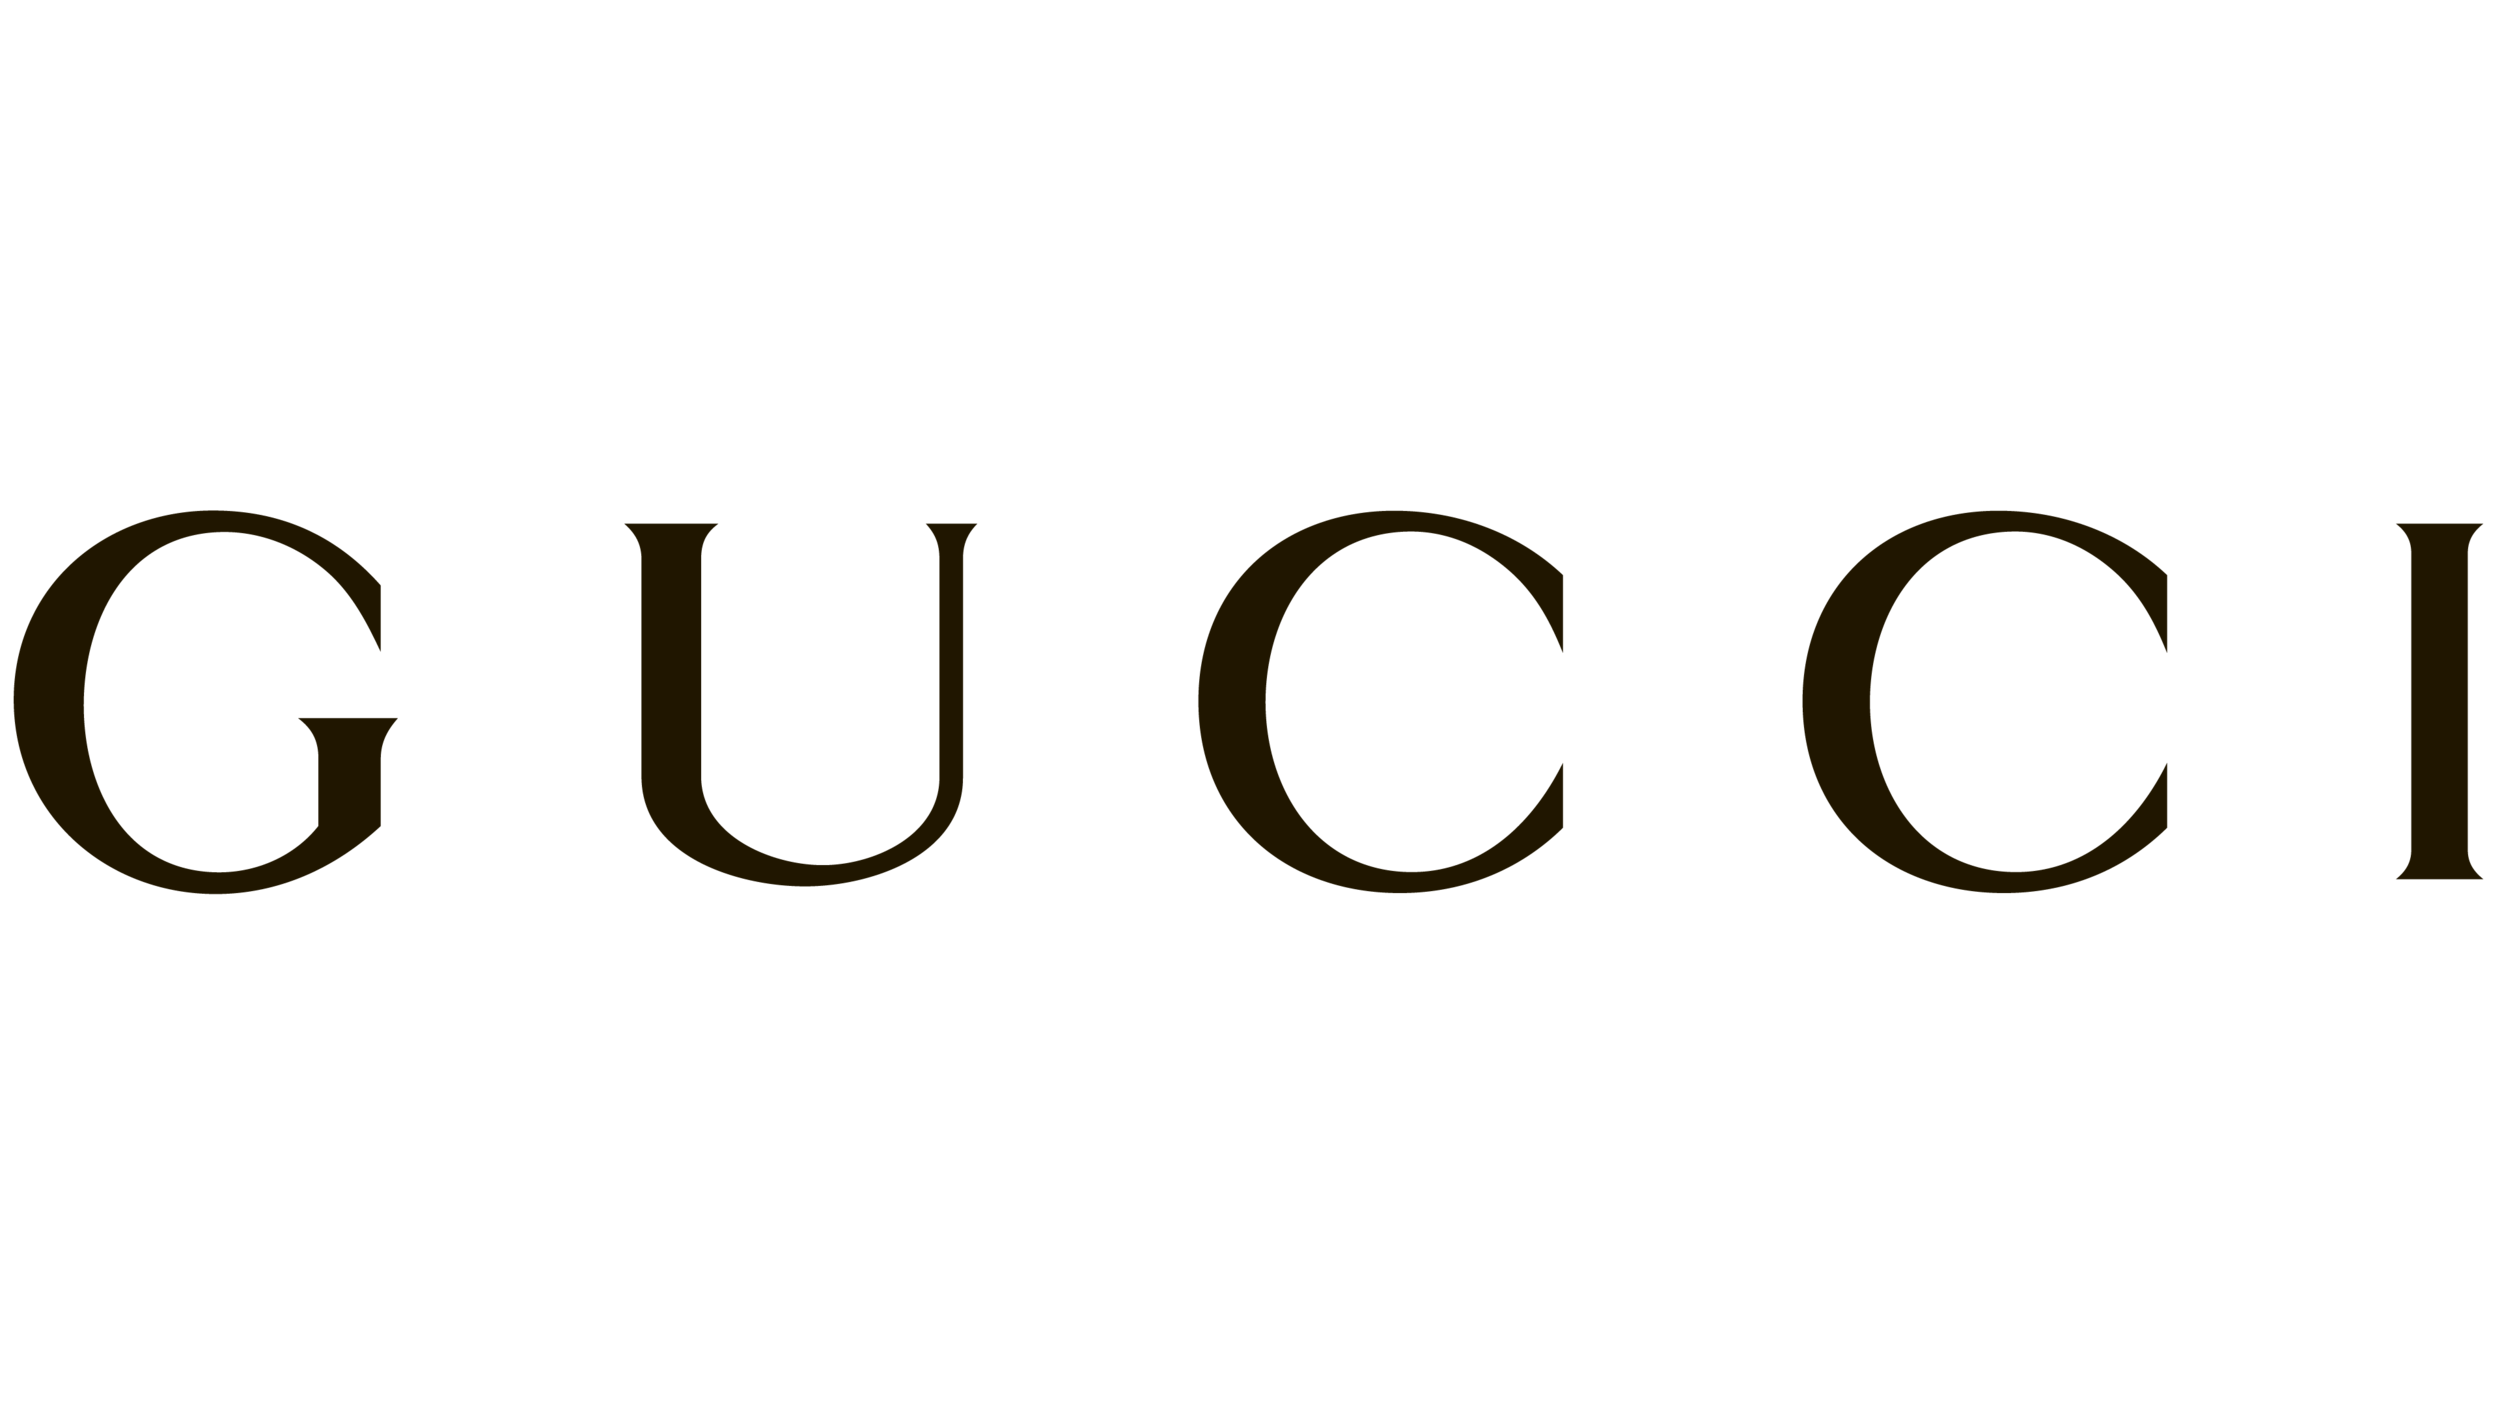 hd-gucci-logo-png-14.png